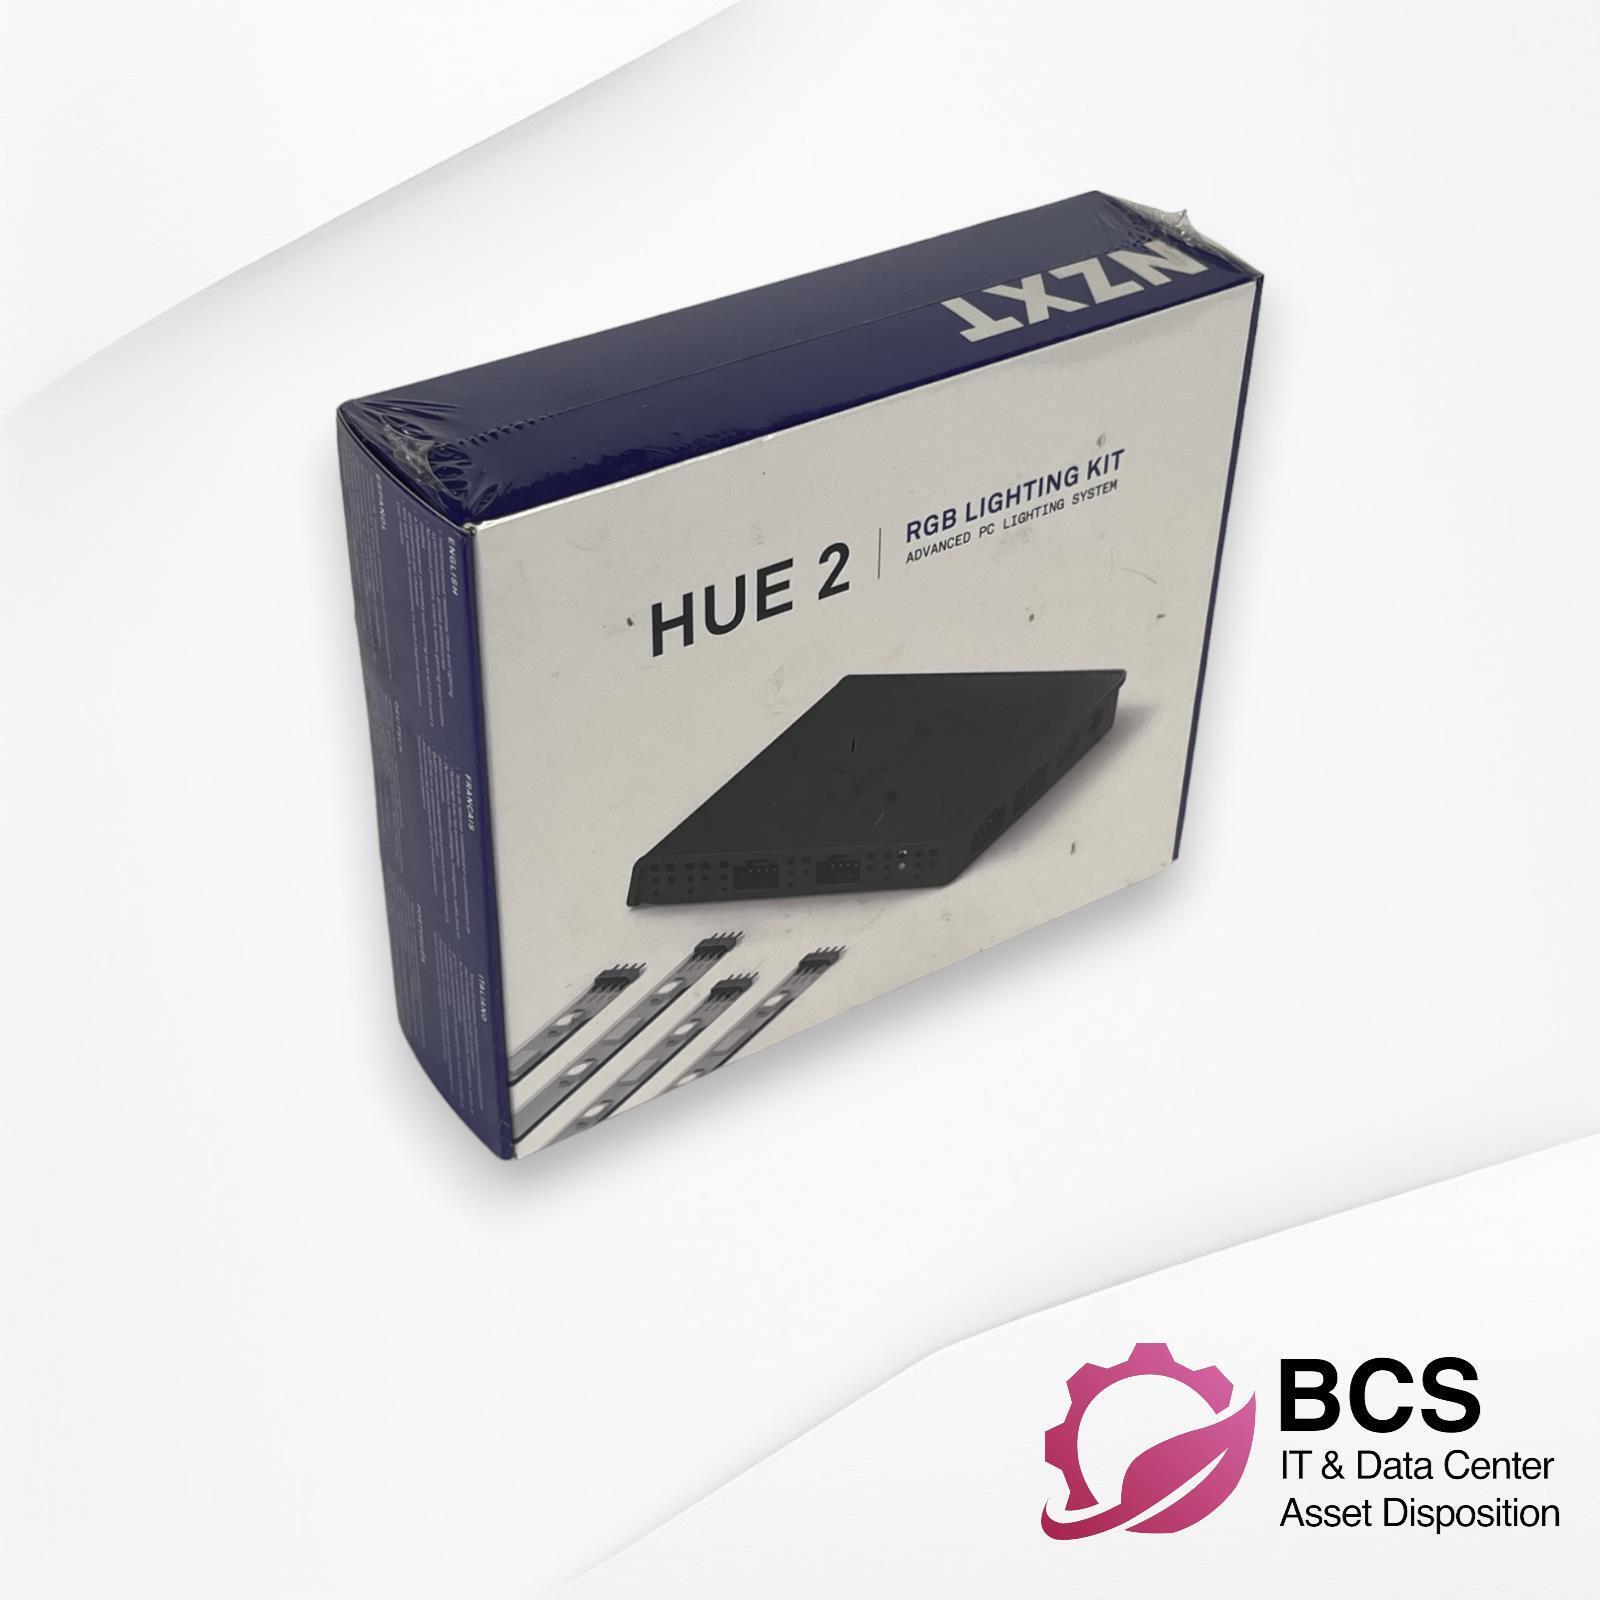 NZXT AC-HUEP2-M1 HUE 2 RGB Lighting Kit Advanced PC Lightning System